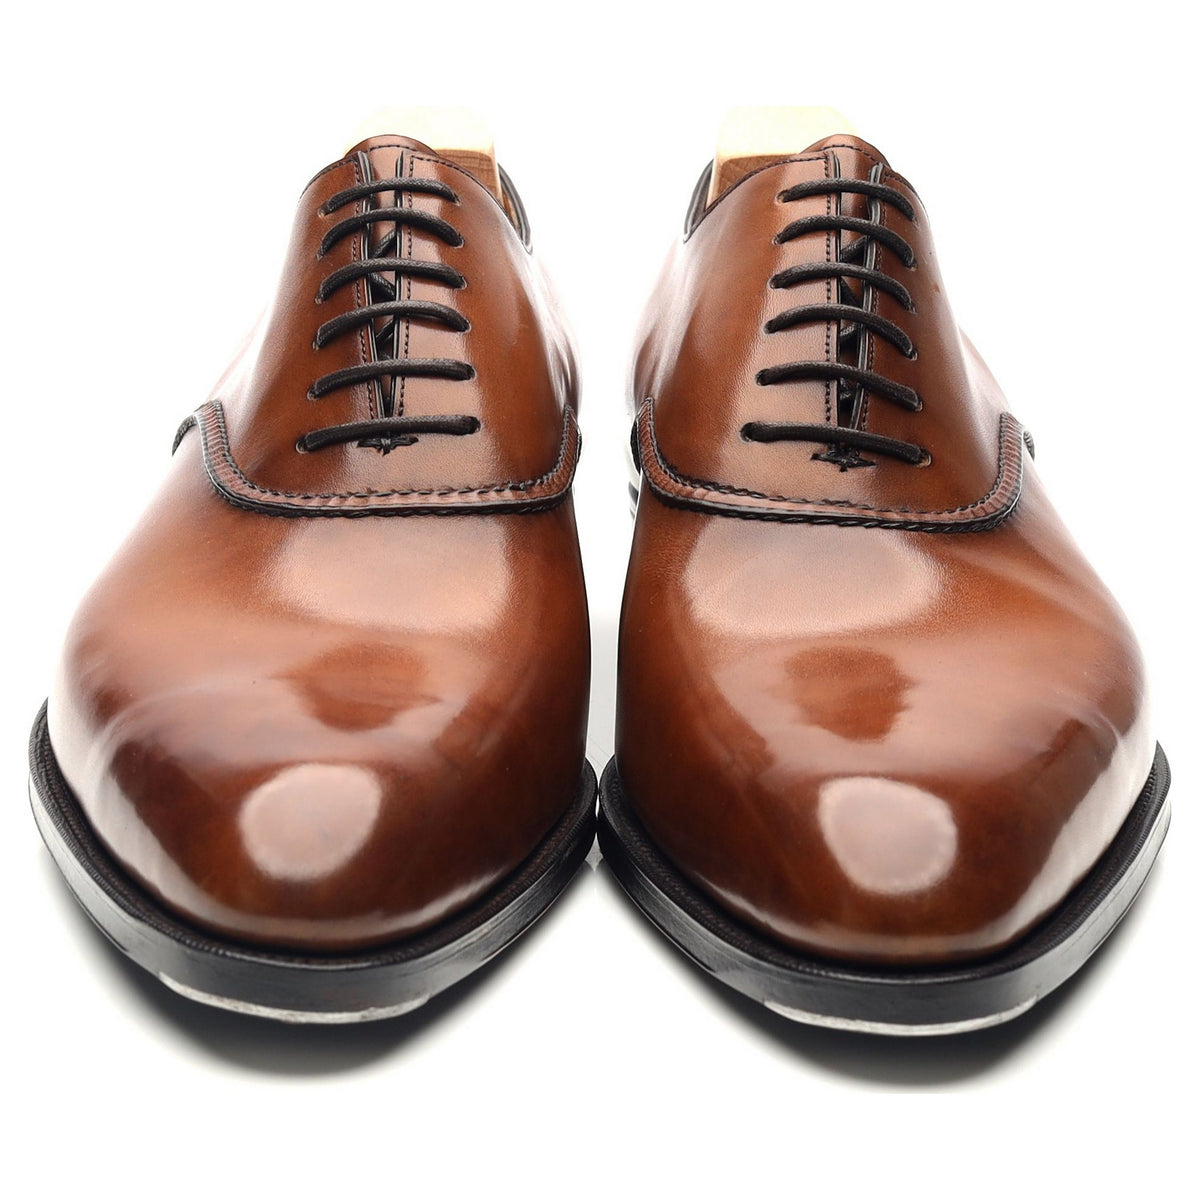 &#39;Wren&#39; Tan Brown Canyon Patina Leather Deco Oxford UK 7.5 F